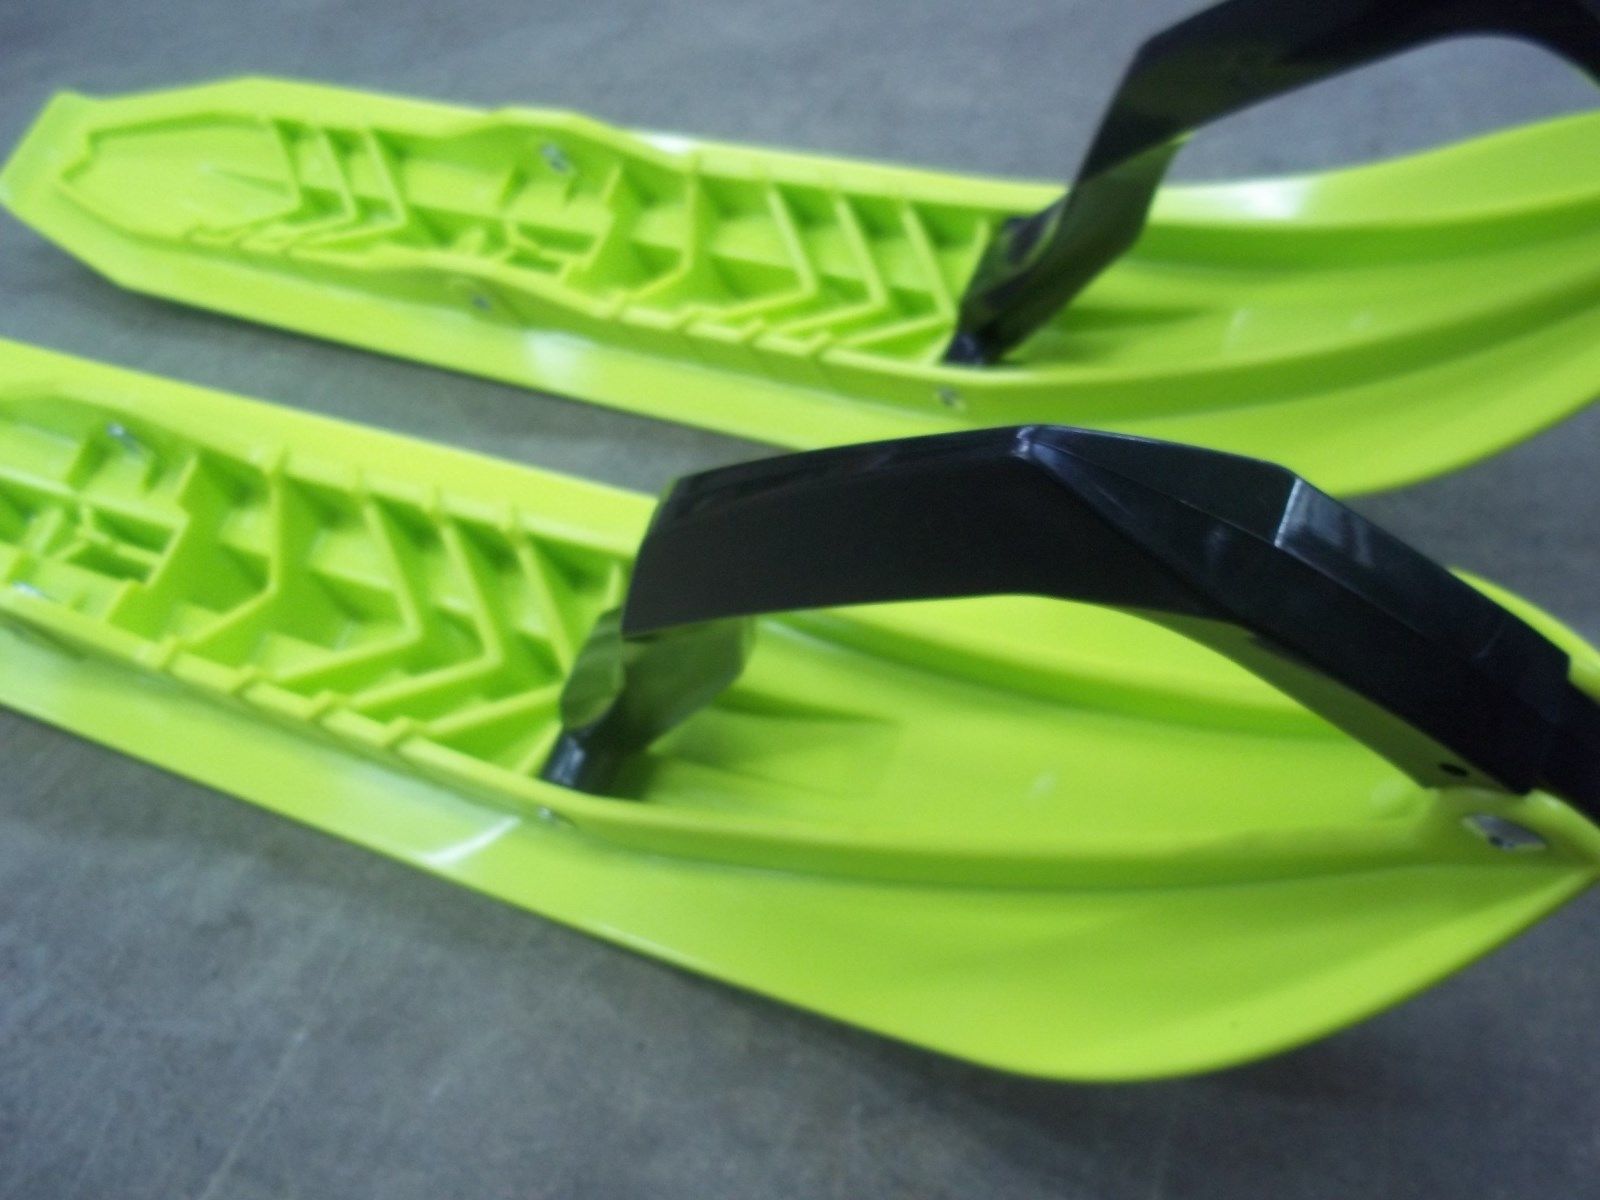 Plasticuri schi cu maner ski-doo culoare verde